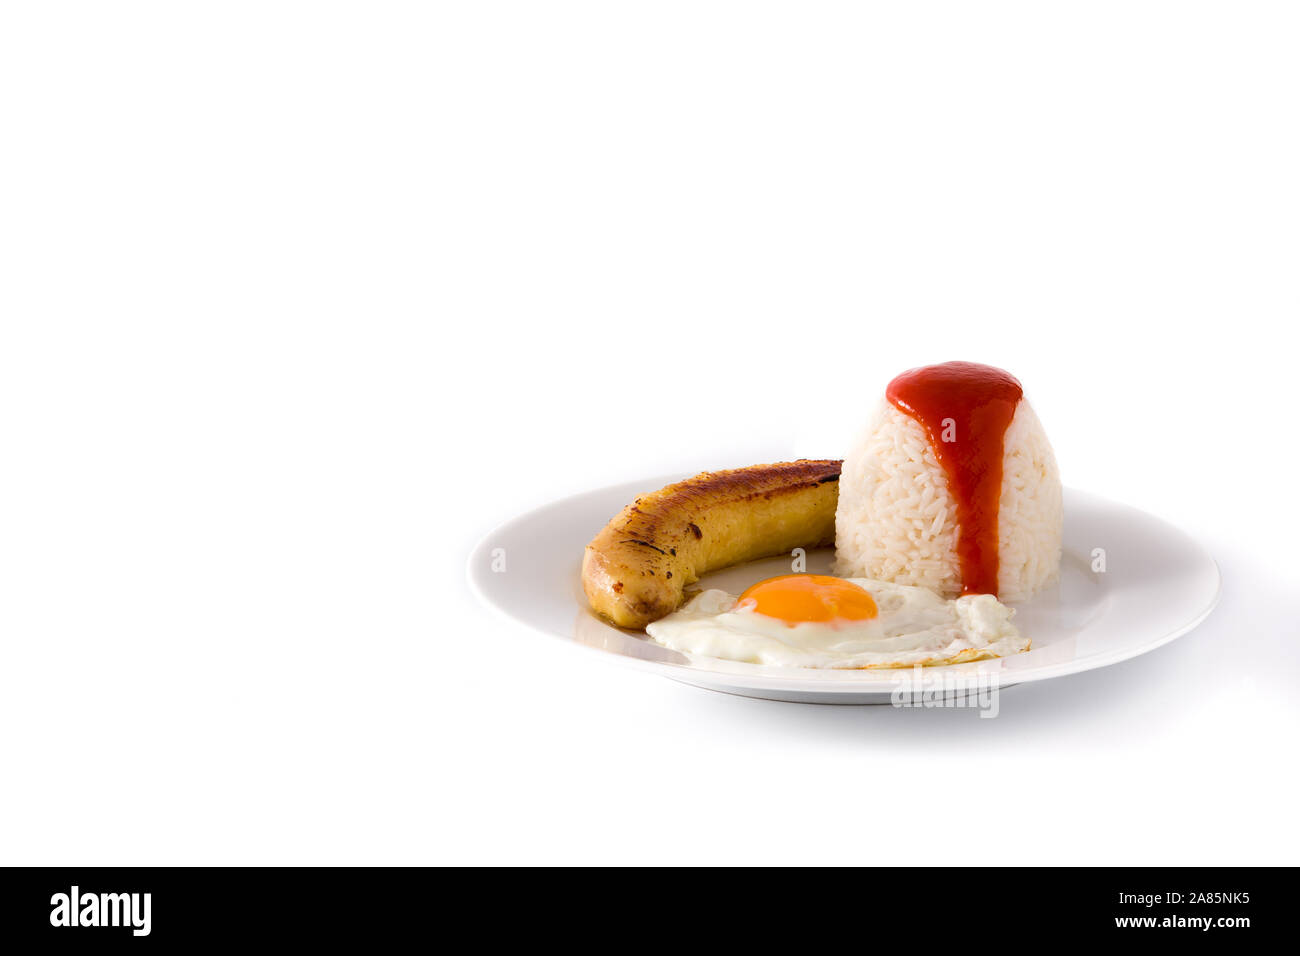 Arroz a la cubana.Typical Cuban rice with fried banana and fried egg on a plate. Copy space Stock Photo